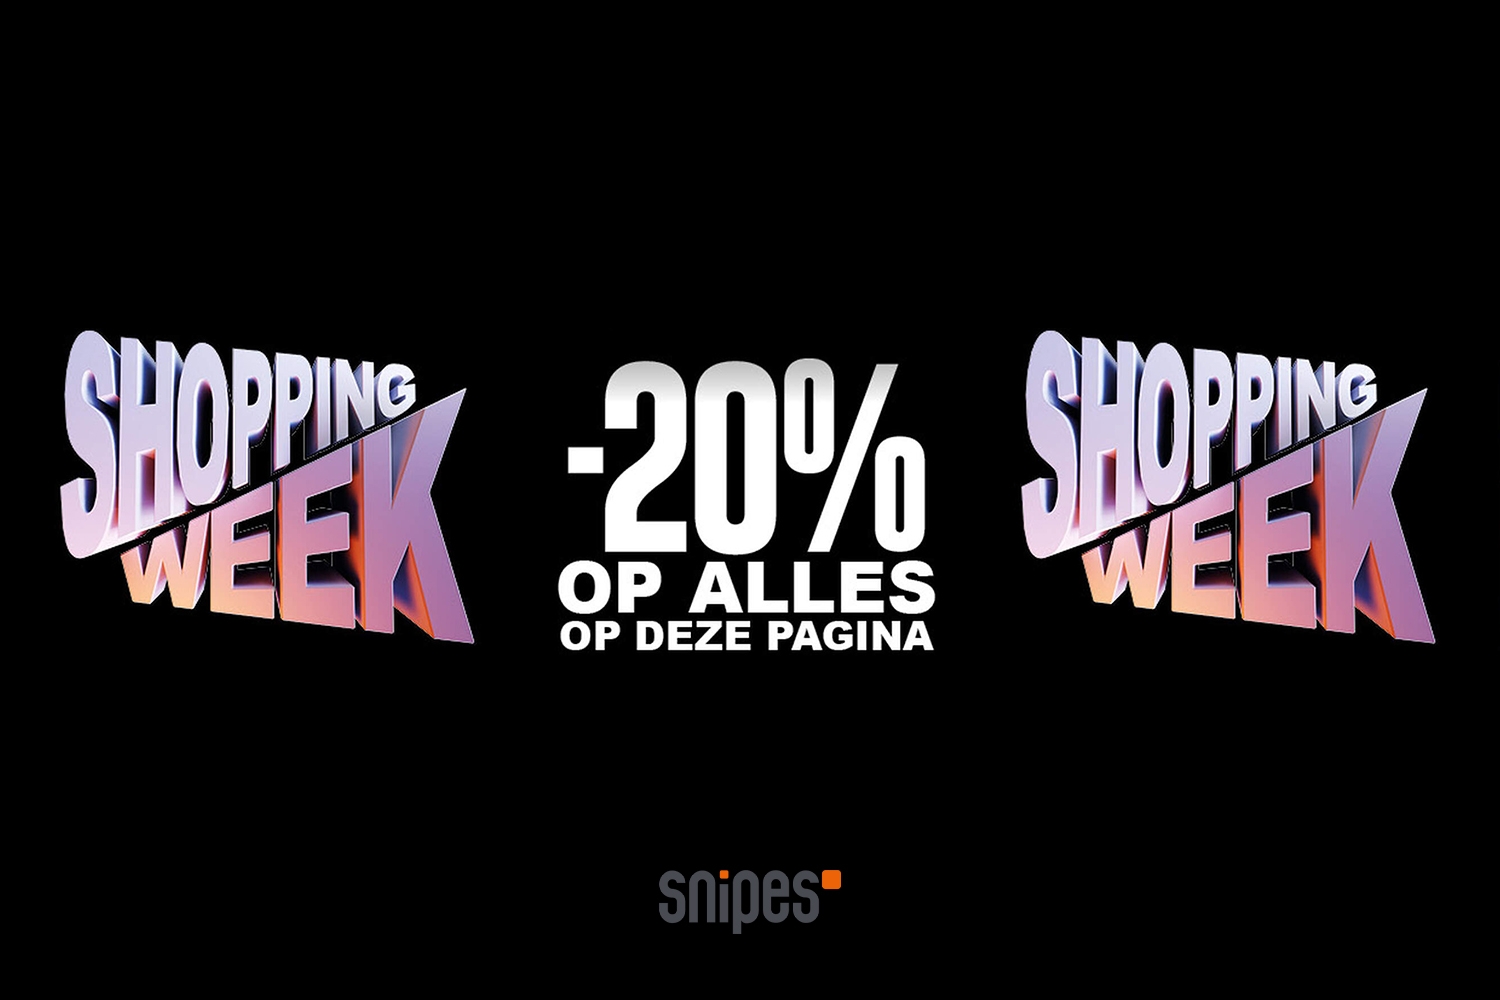 Snipes Shopping Week: 20% korting op bijna alles